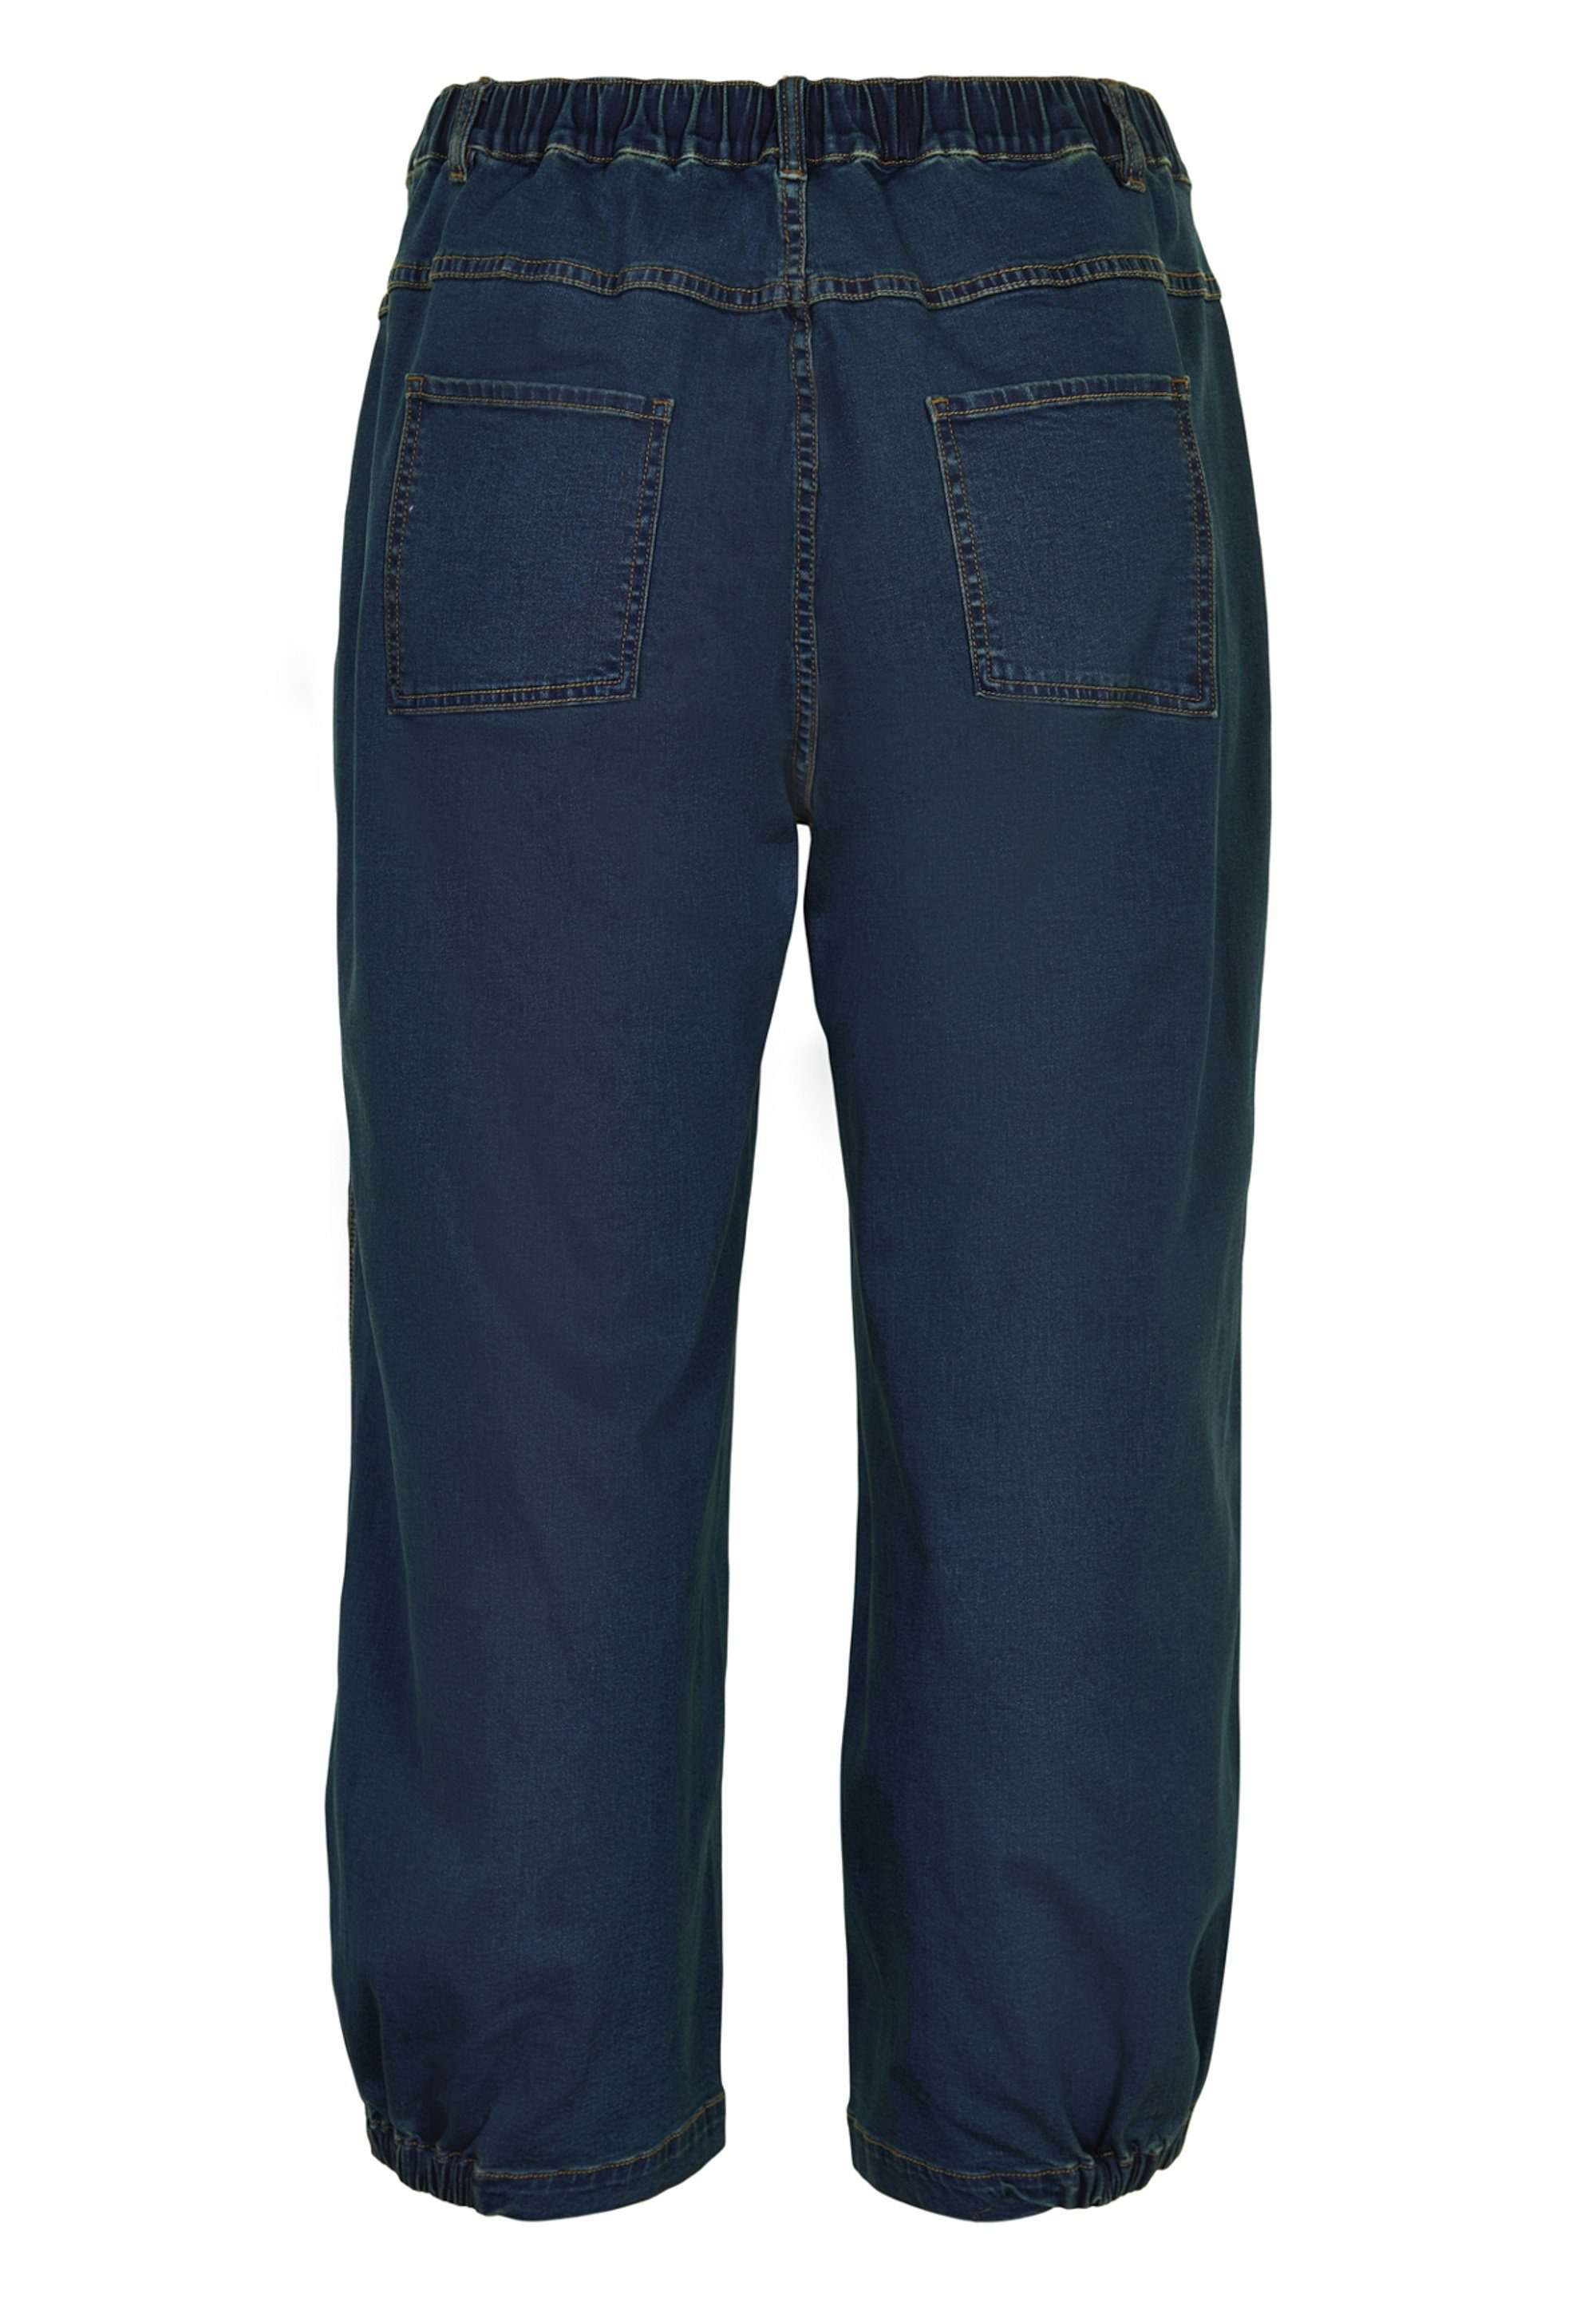 GOZZIP 3/4-Jeans Clara Danish Dark blue design denim